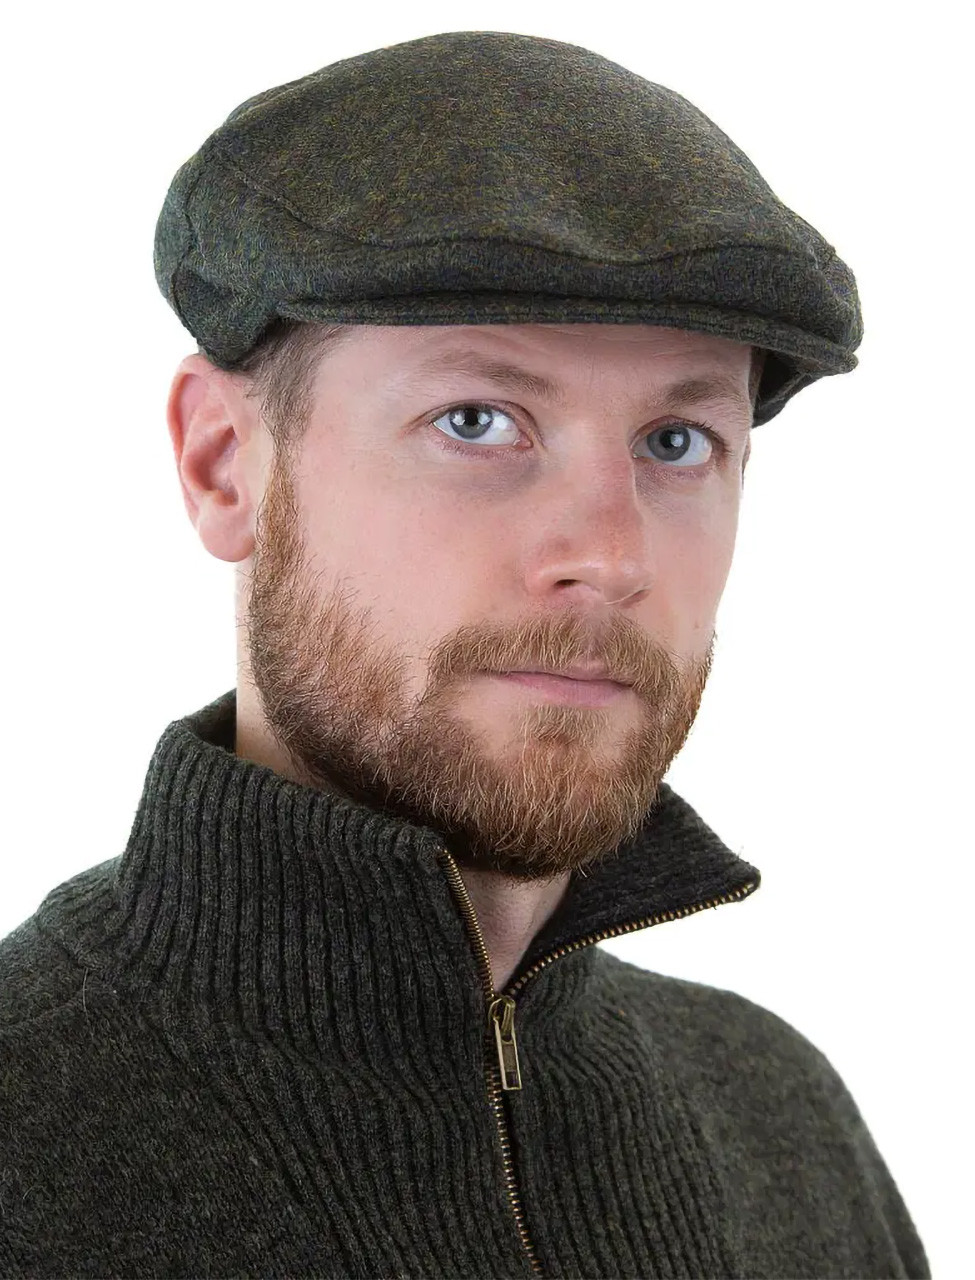 Irish Flat Caps & Irish Tweed Caps [Free Shipping Offer]